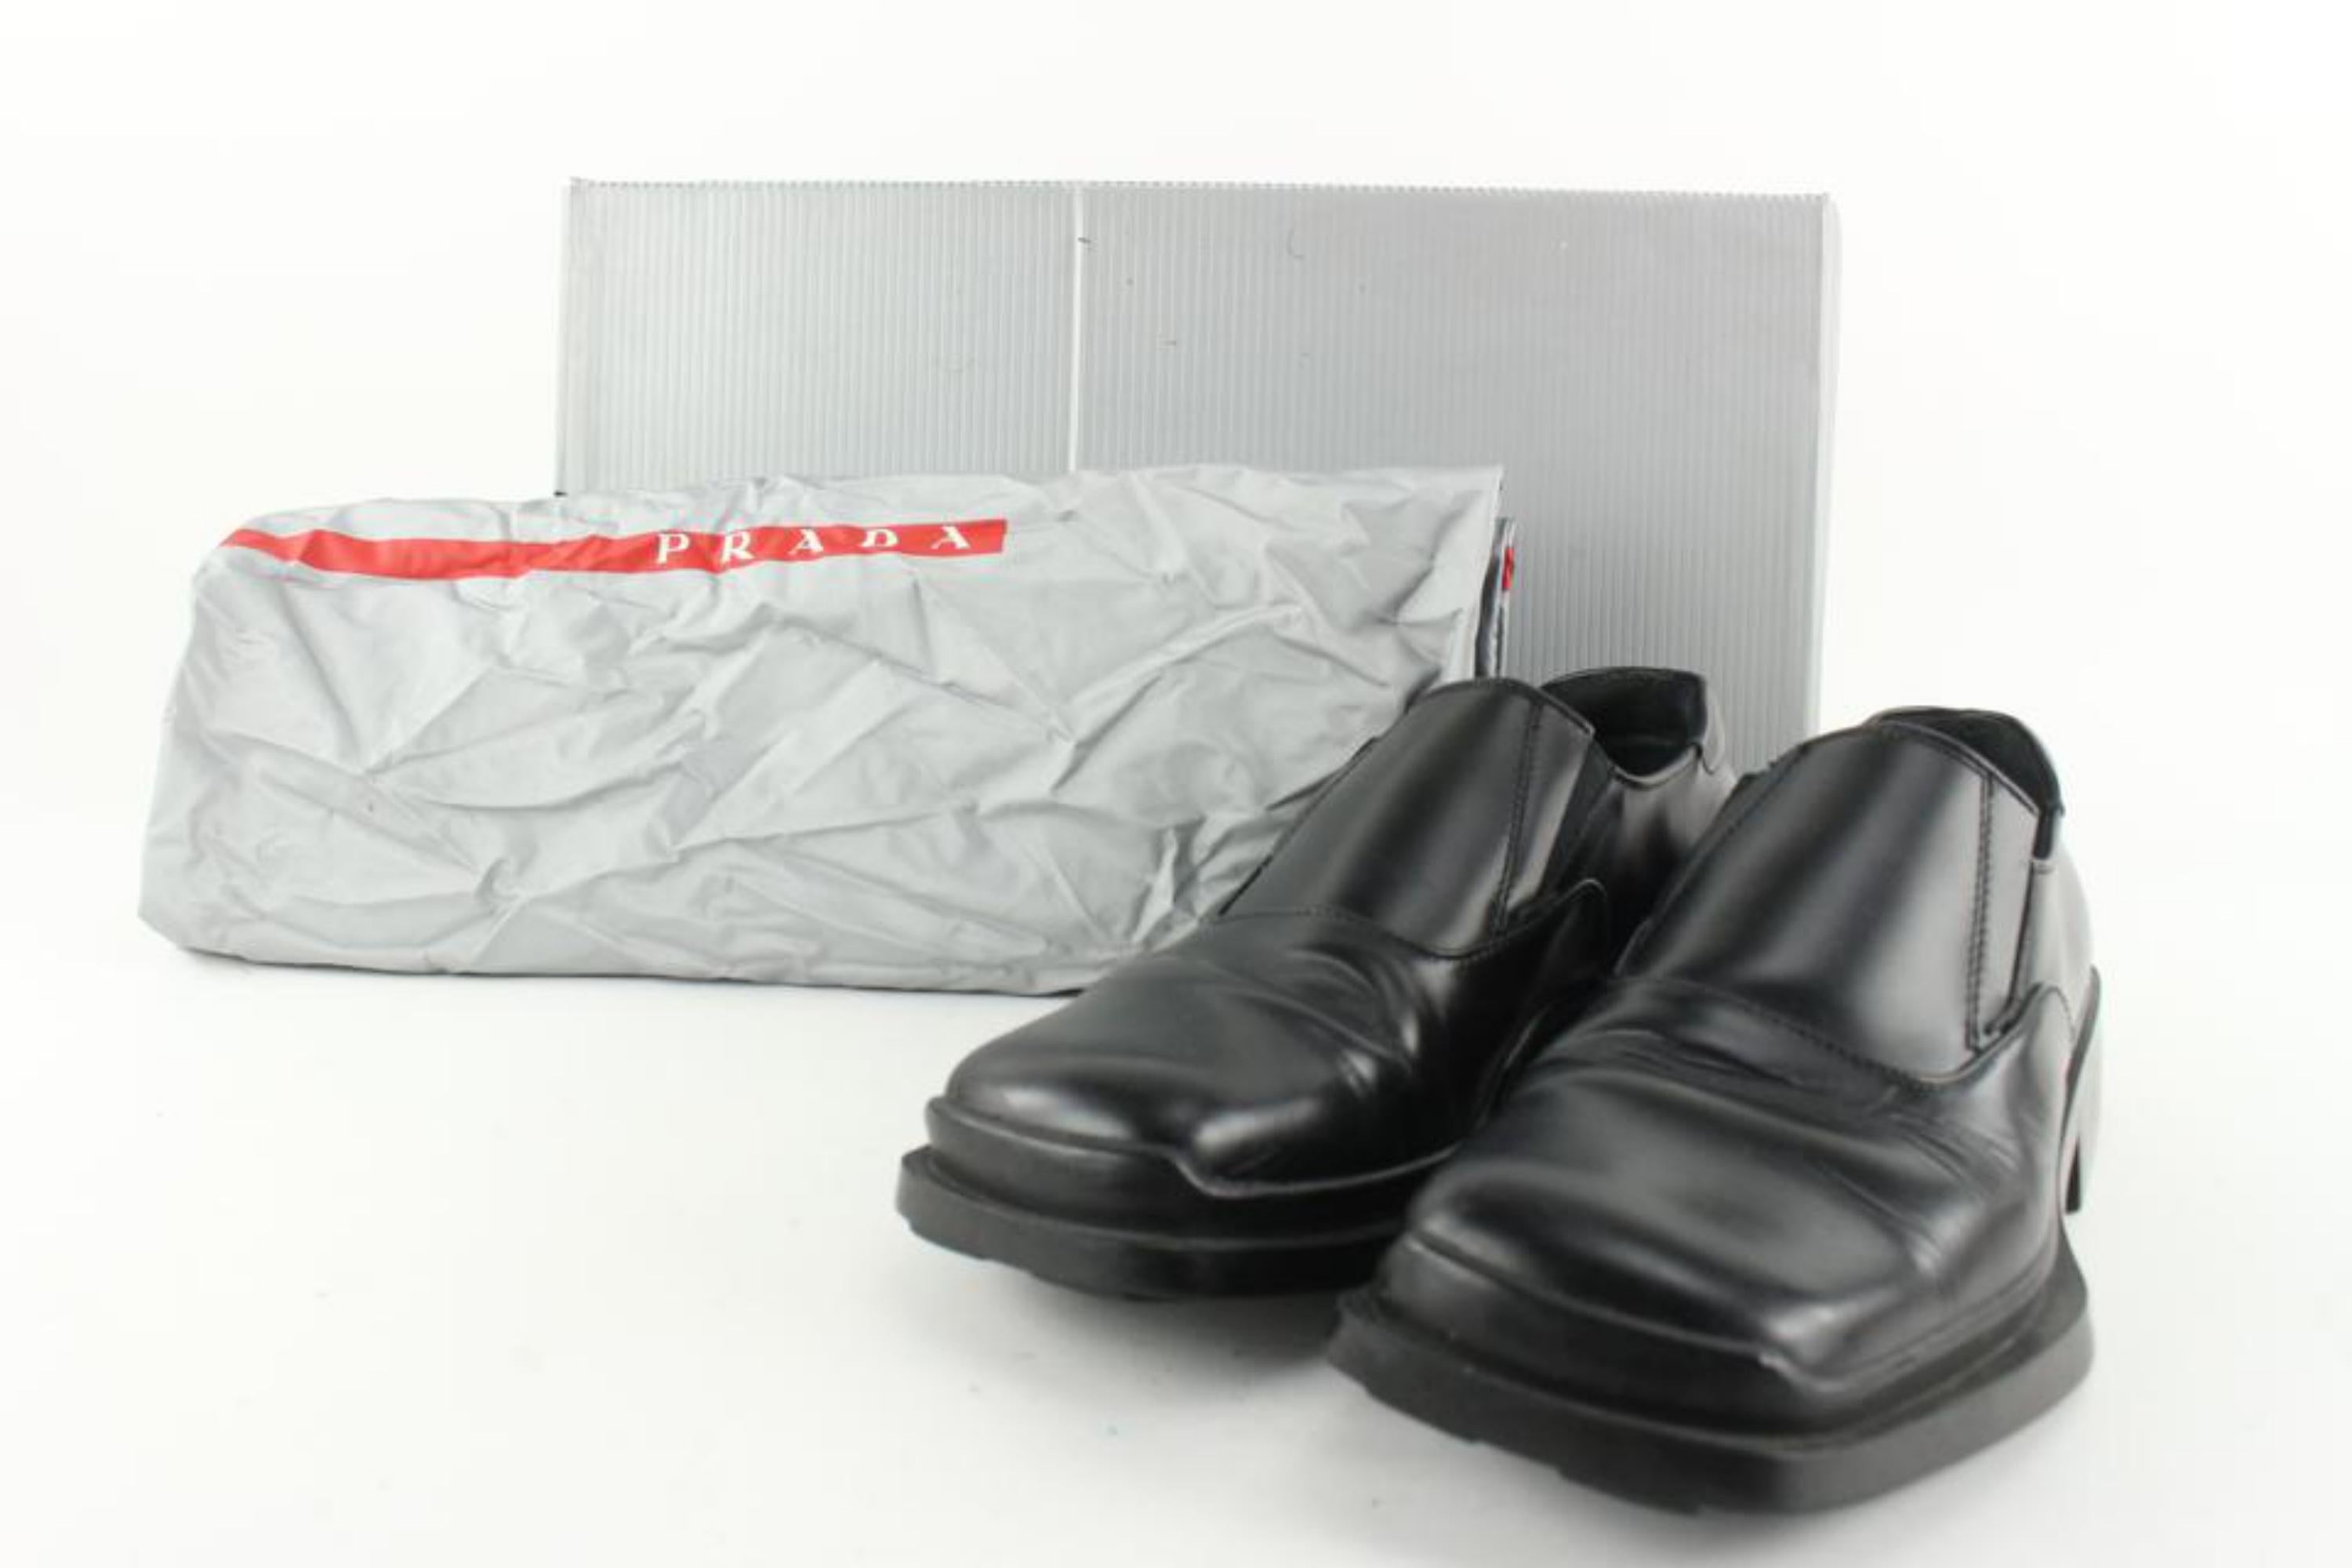 Prada Men's 7 US Black Leather Dress Sneaker 1223p20
Date Code/Serial Number: 7 1129
Made In: Italy
Measurements: Length:  11.75